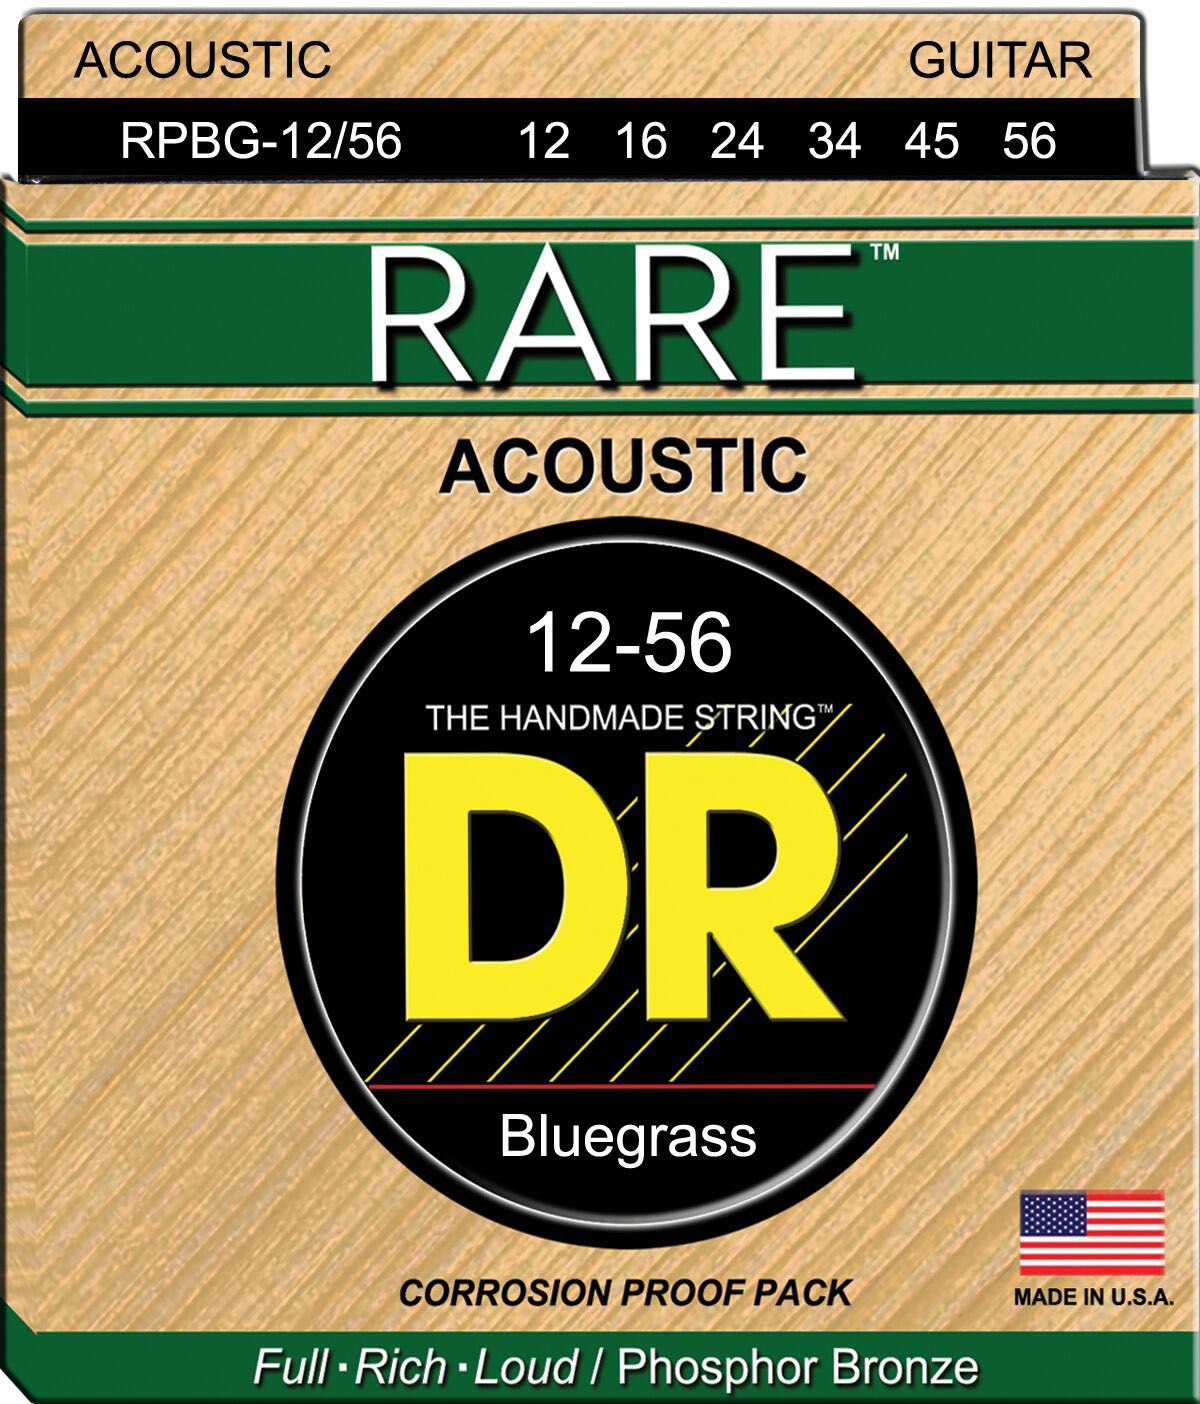 Струны для акустической гитары DR RPBG-12/56 Rare Phosphor Bronze Acoustic Guitar Strings Bluegrass 12/56